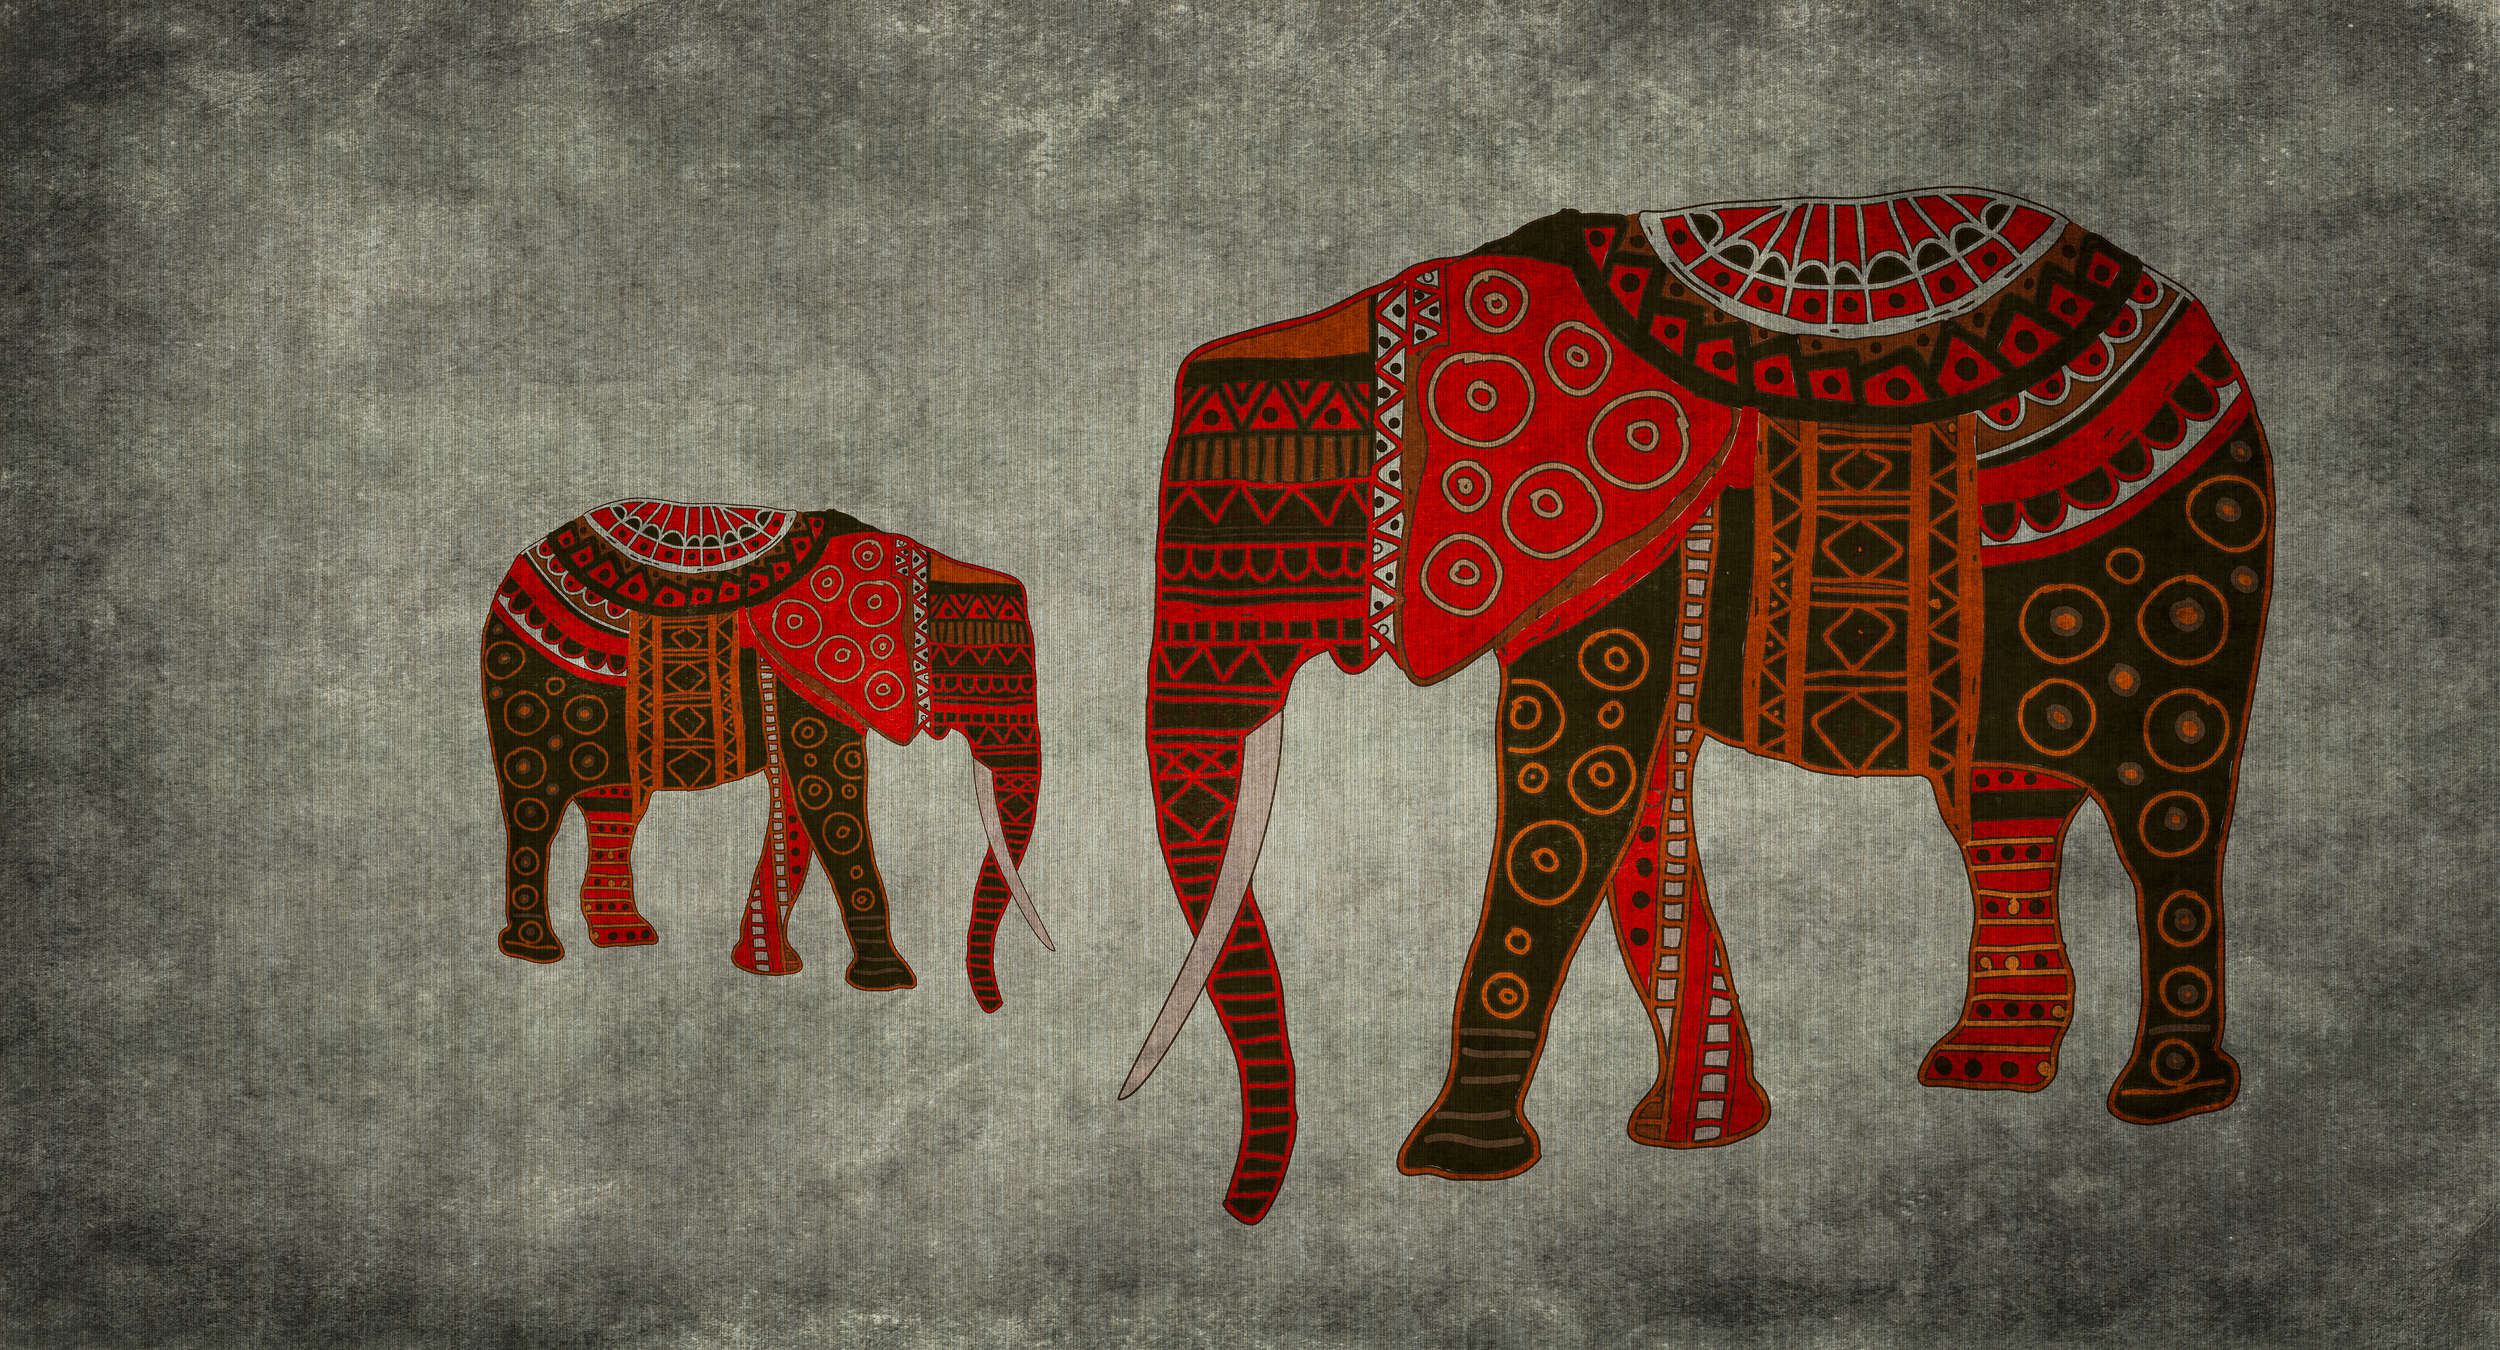             Nairobi 4 – Elefanten Fototapete mit Ethno Mustern & Struktureffekt
        